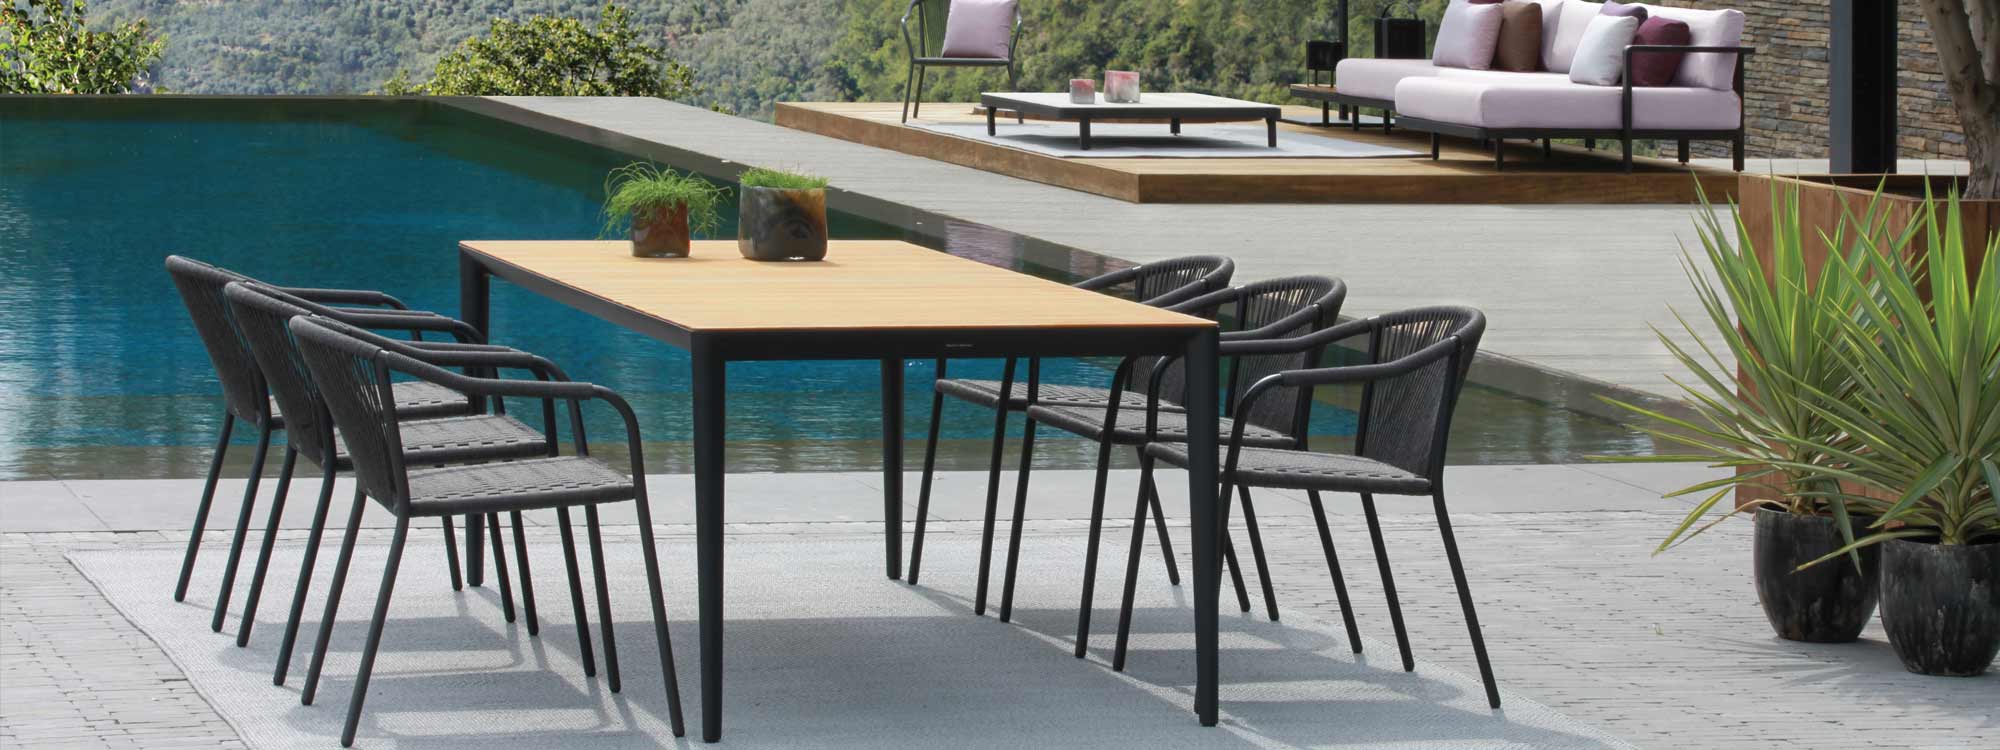 Image of Samba garden chairs and U-nite table with teak top by Royal Botania